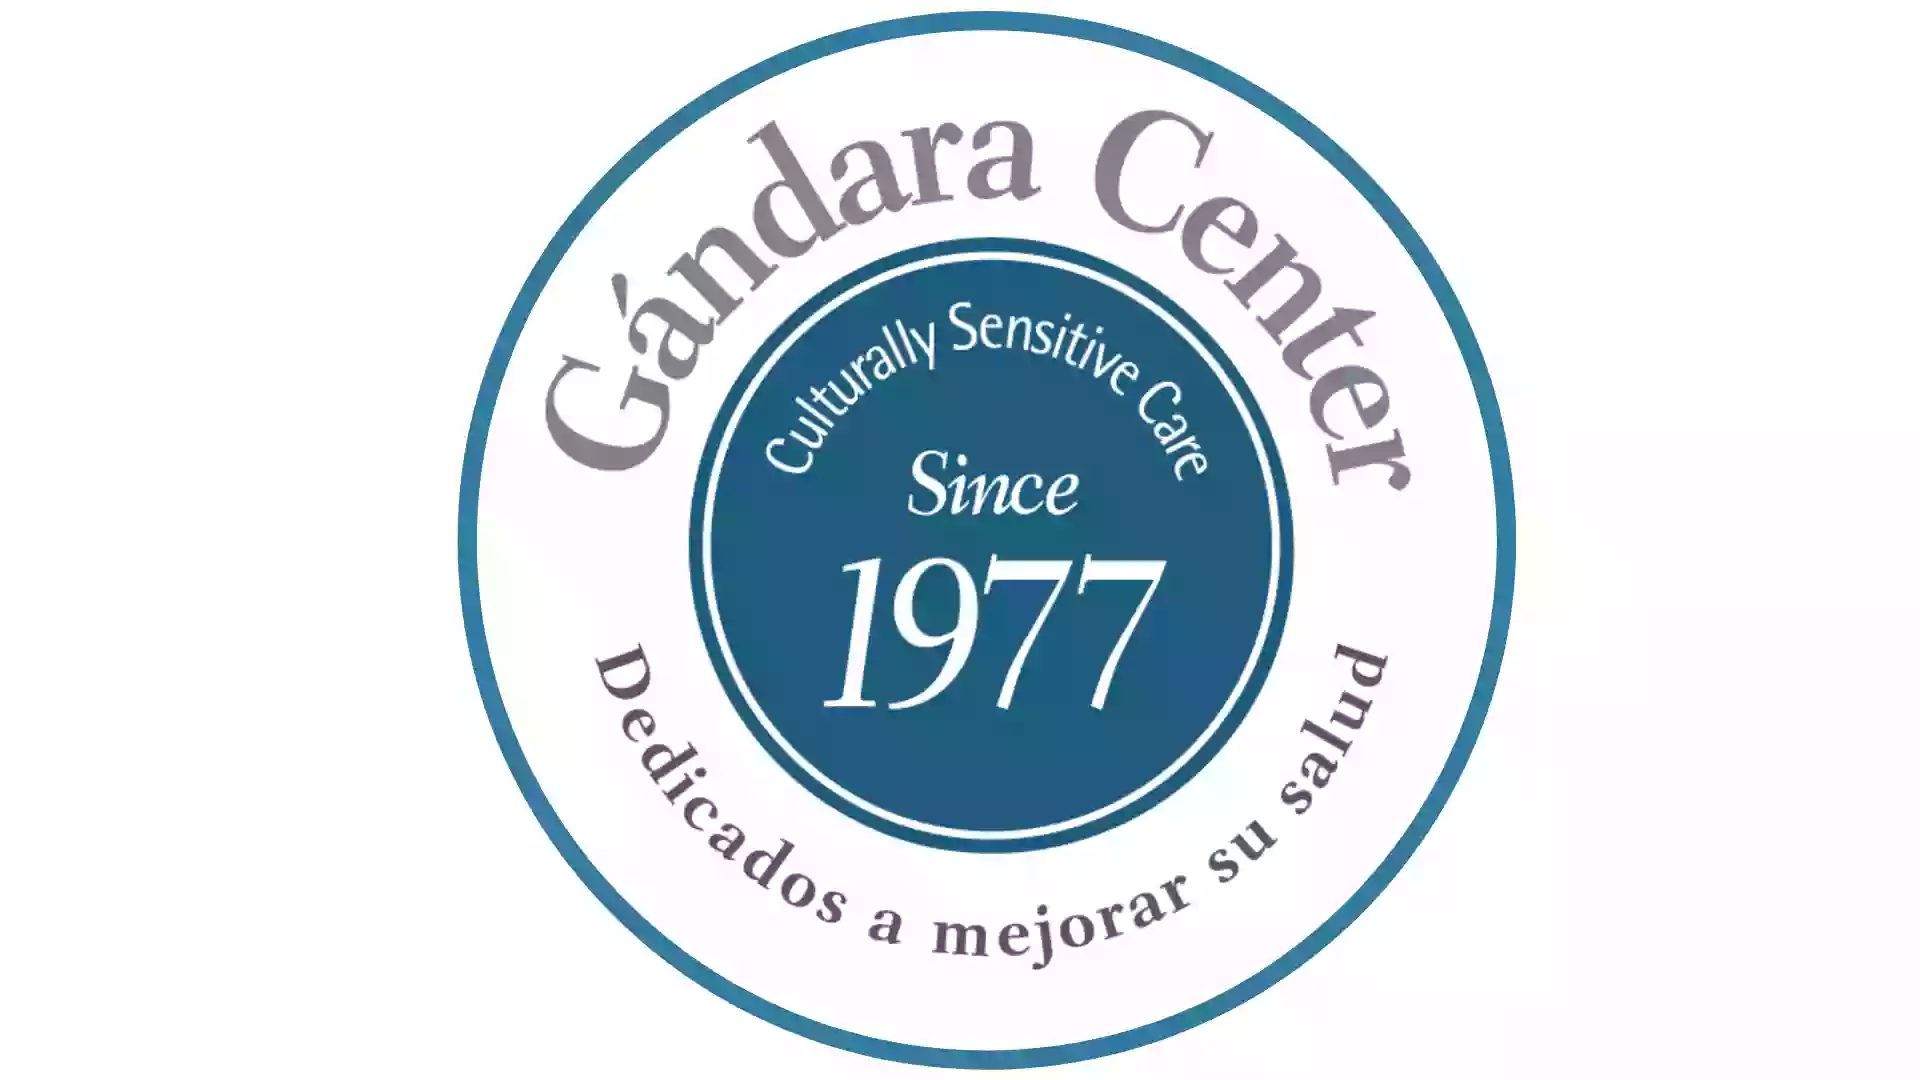 The Gandara Mental Health Center